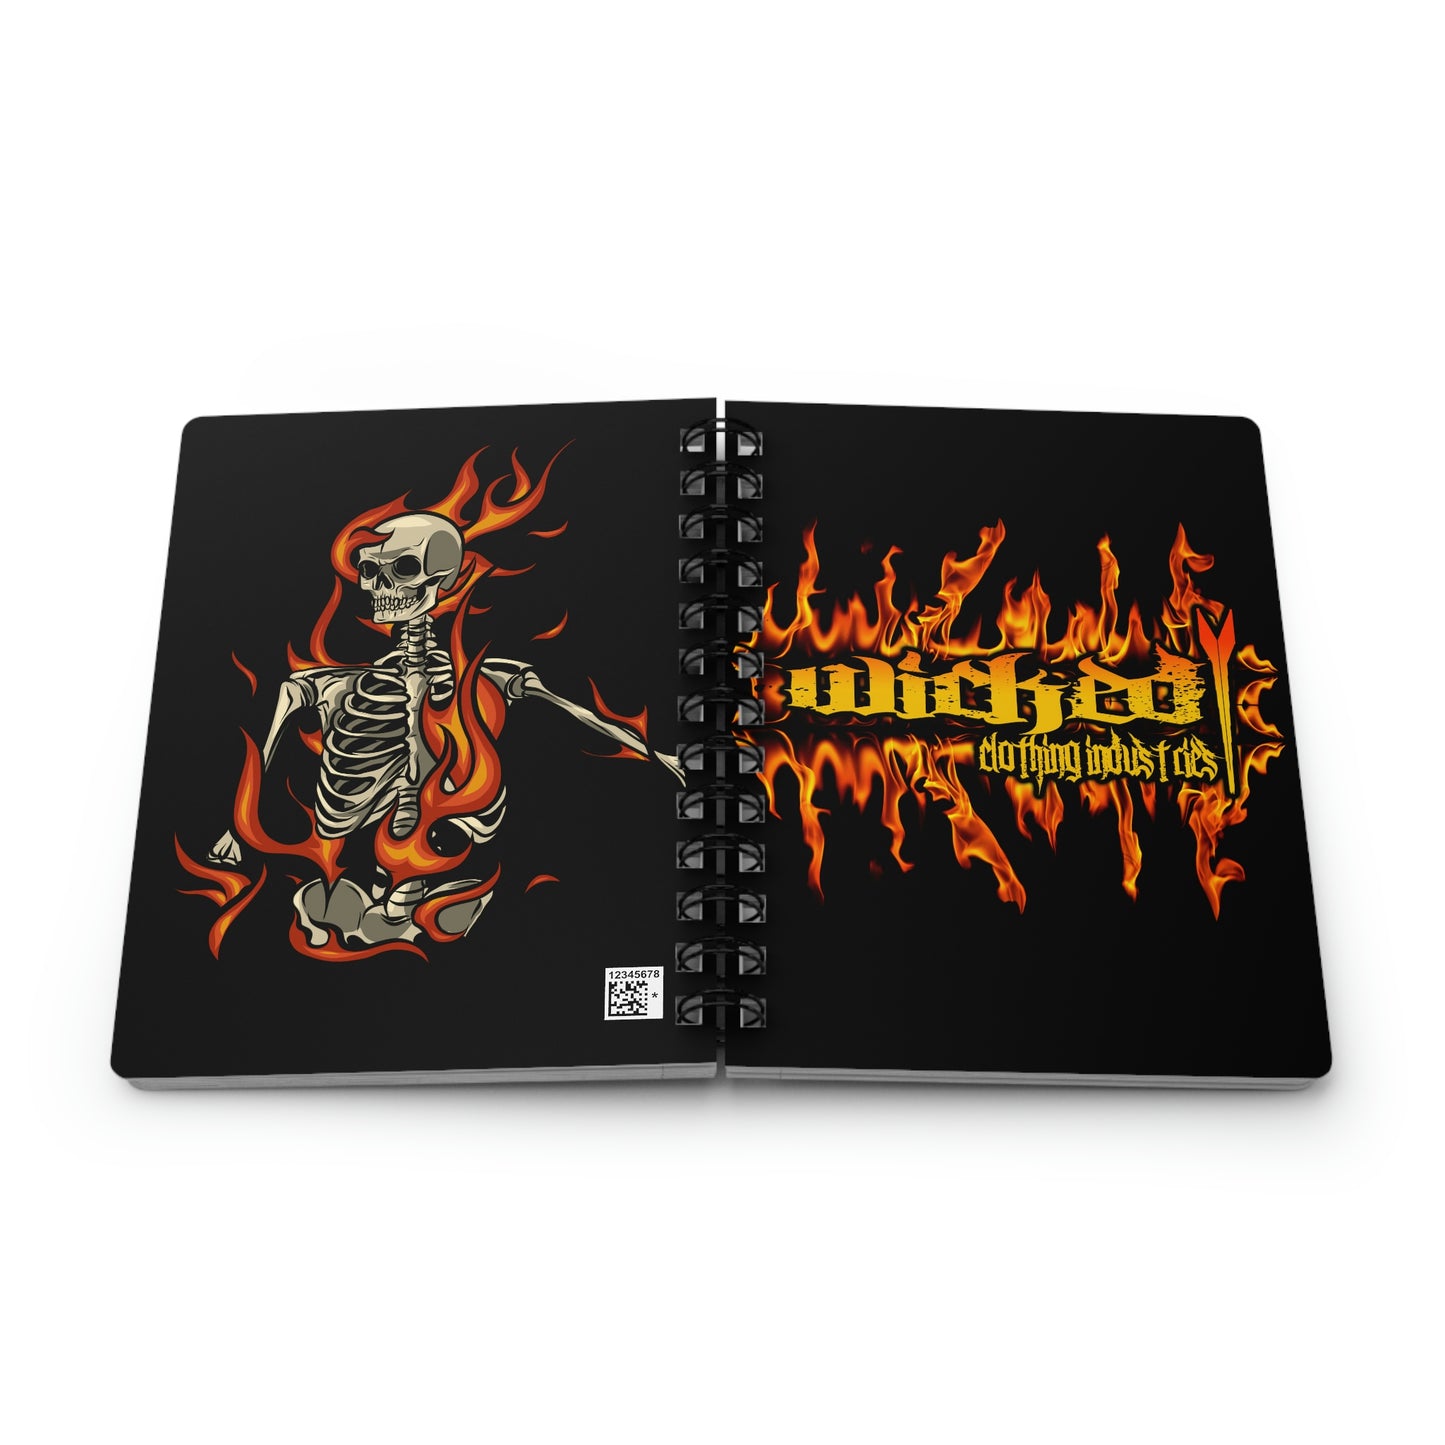 Wicked Flames /Spiral Bound Journal